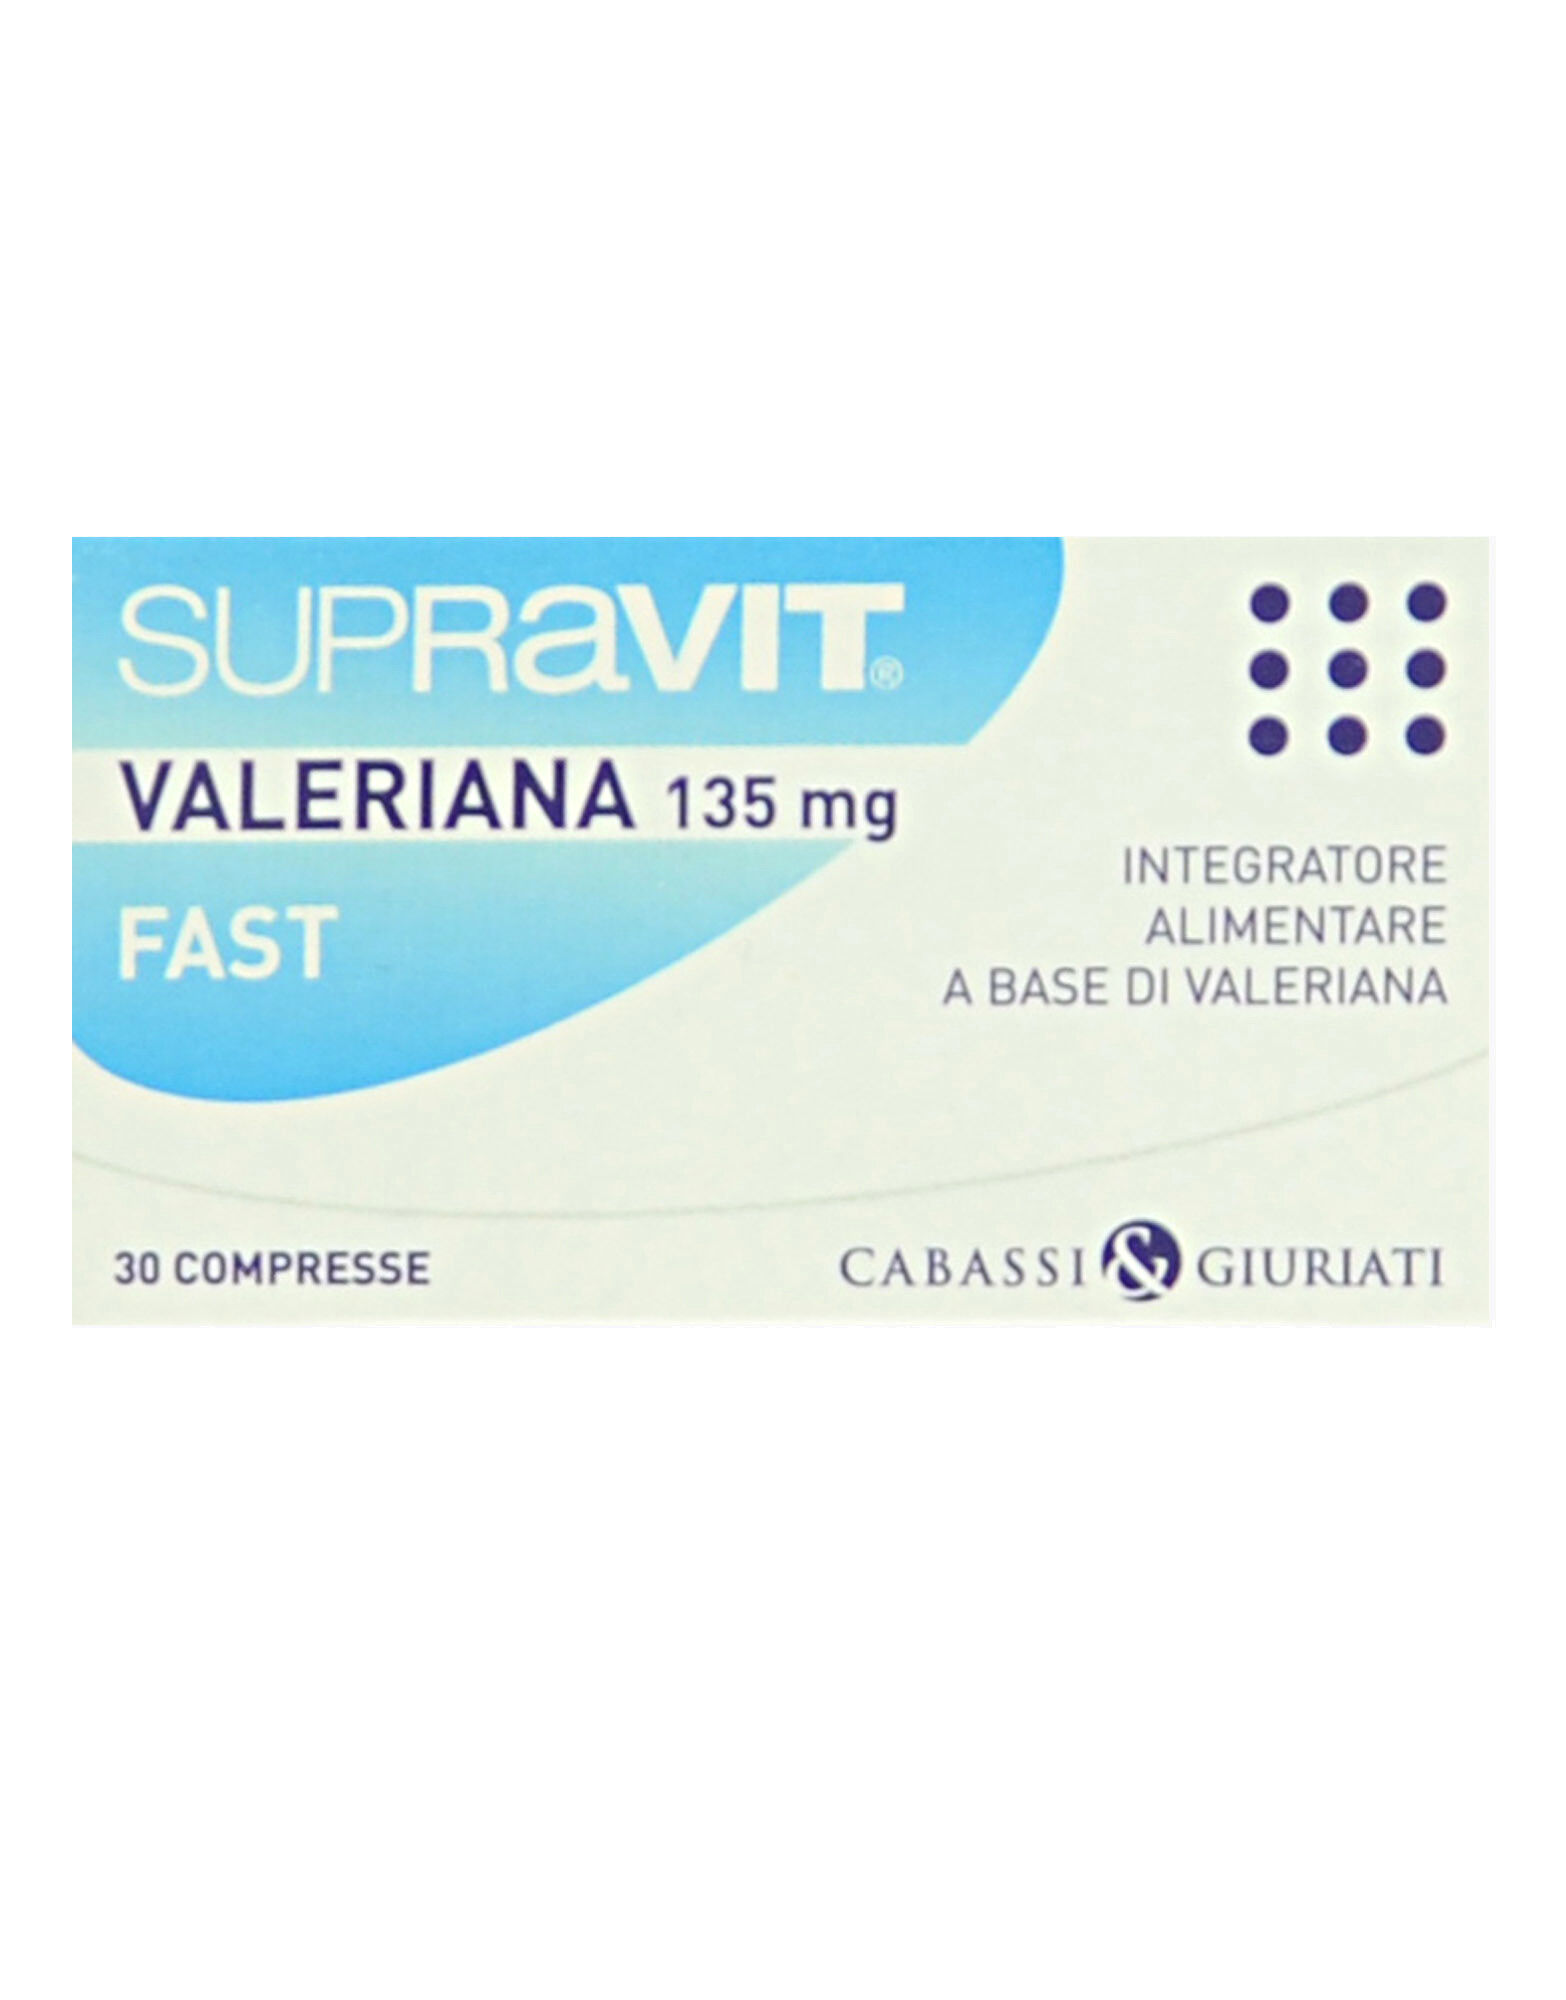 CABASSI & GIURIATI Supravit - Valeriana 135mg Fast 30 Compresse